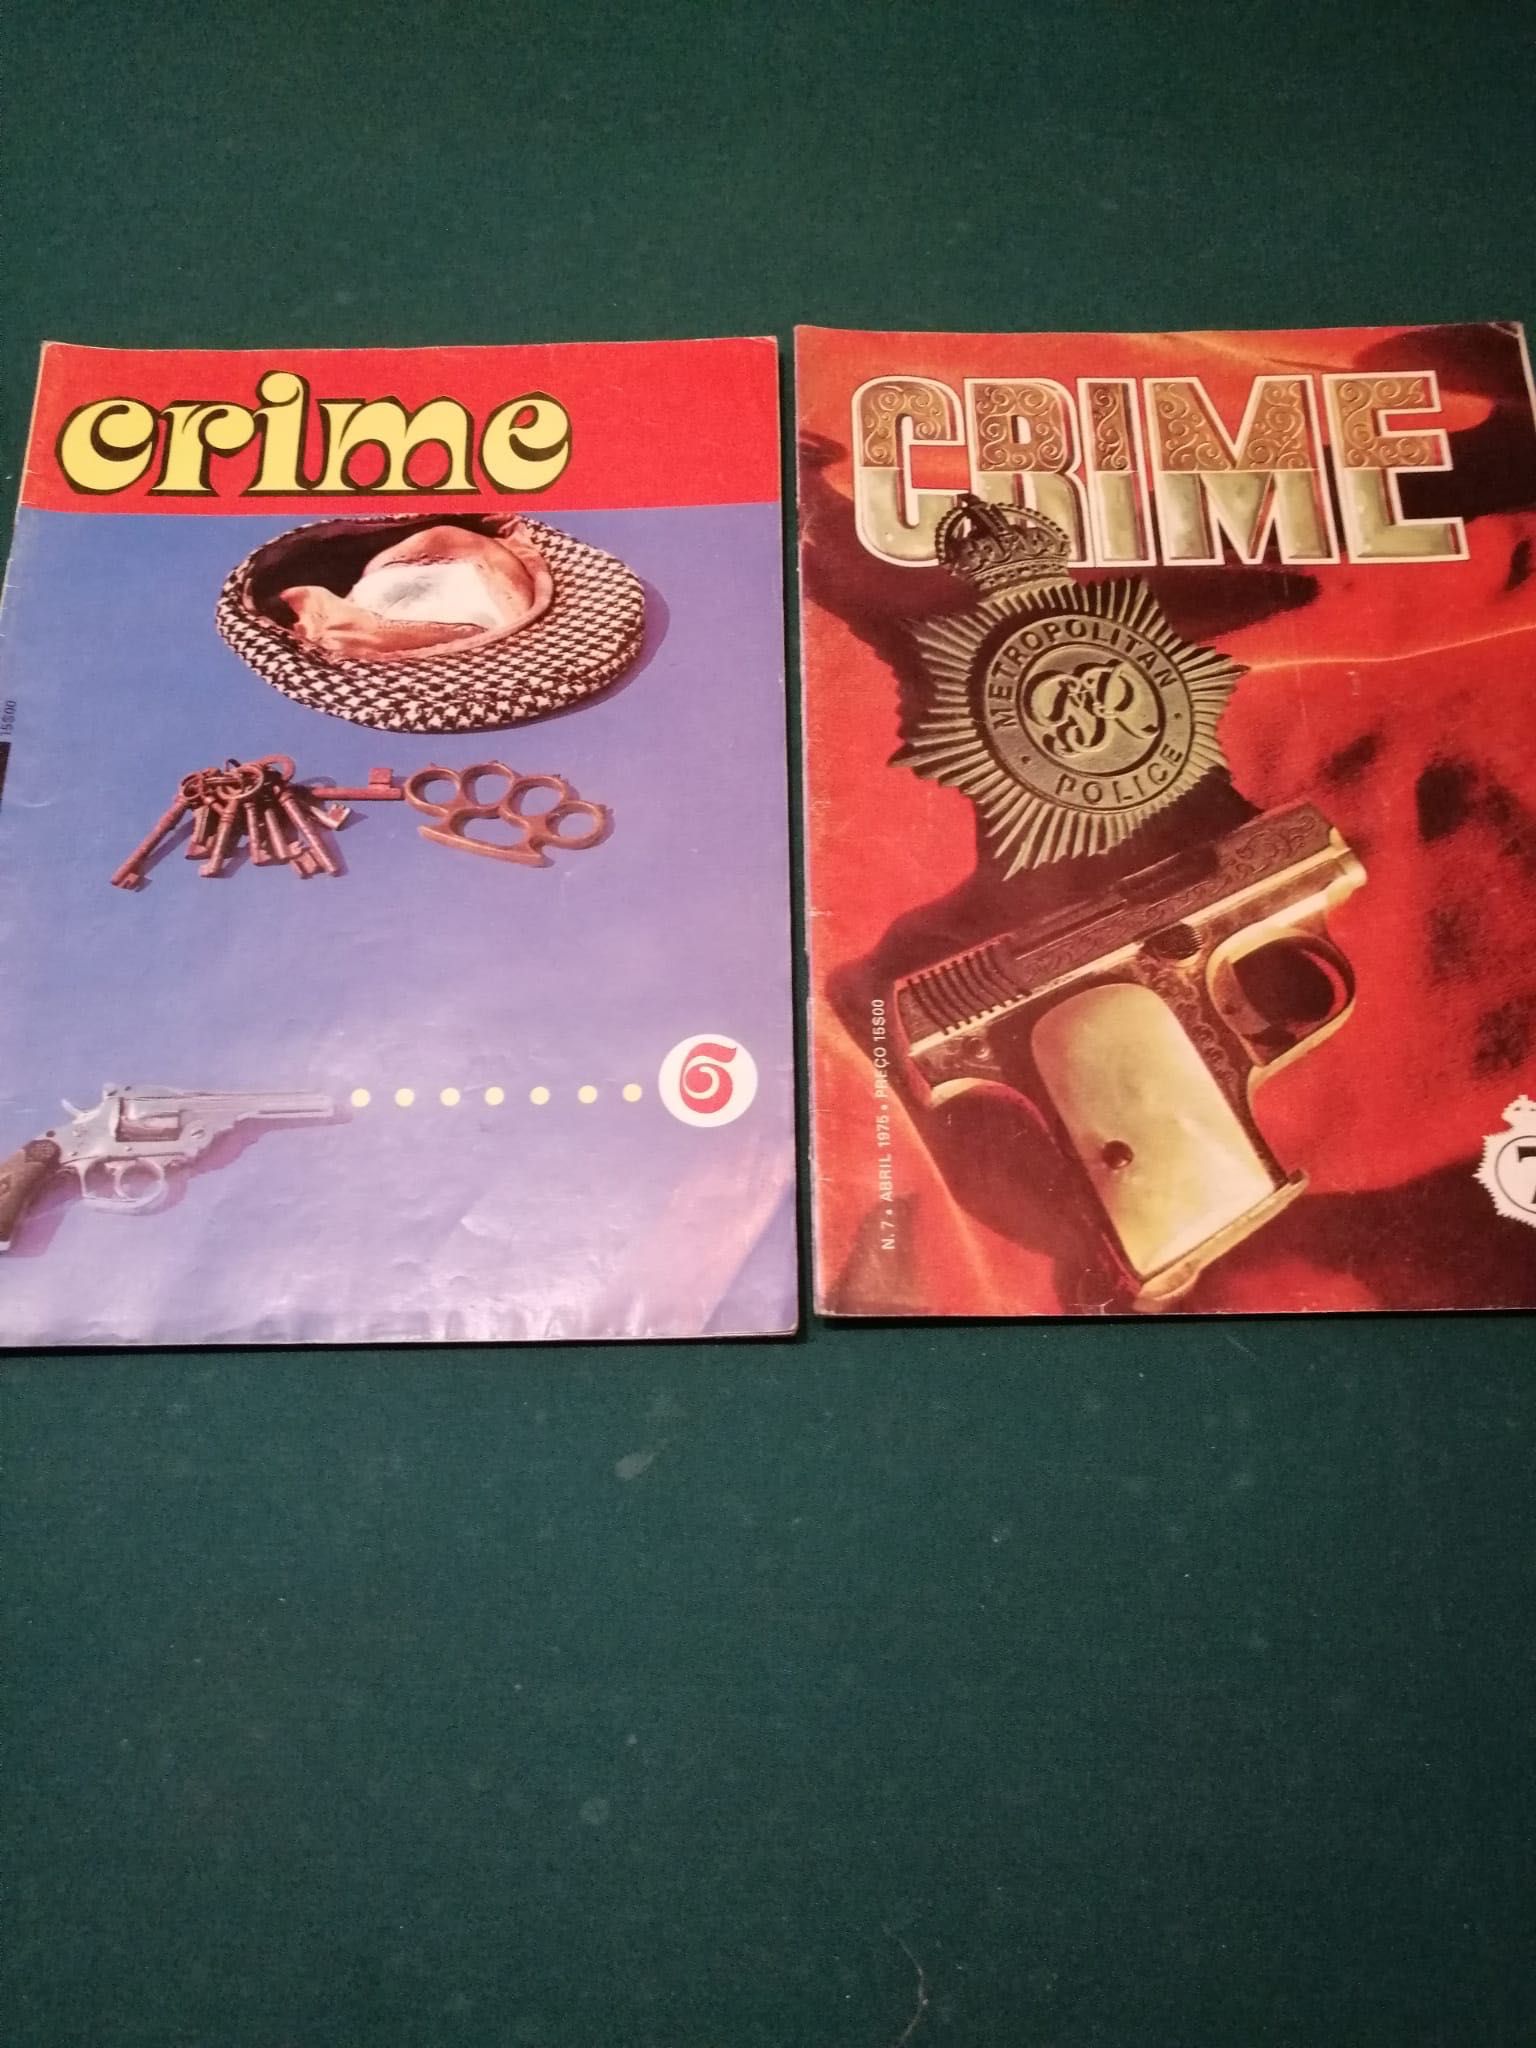 5 Revistas CRIME